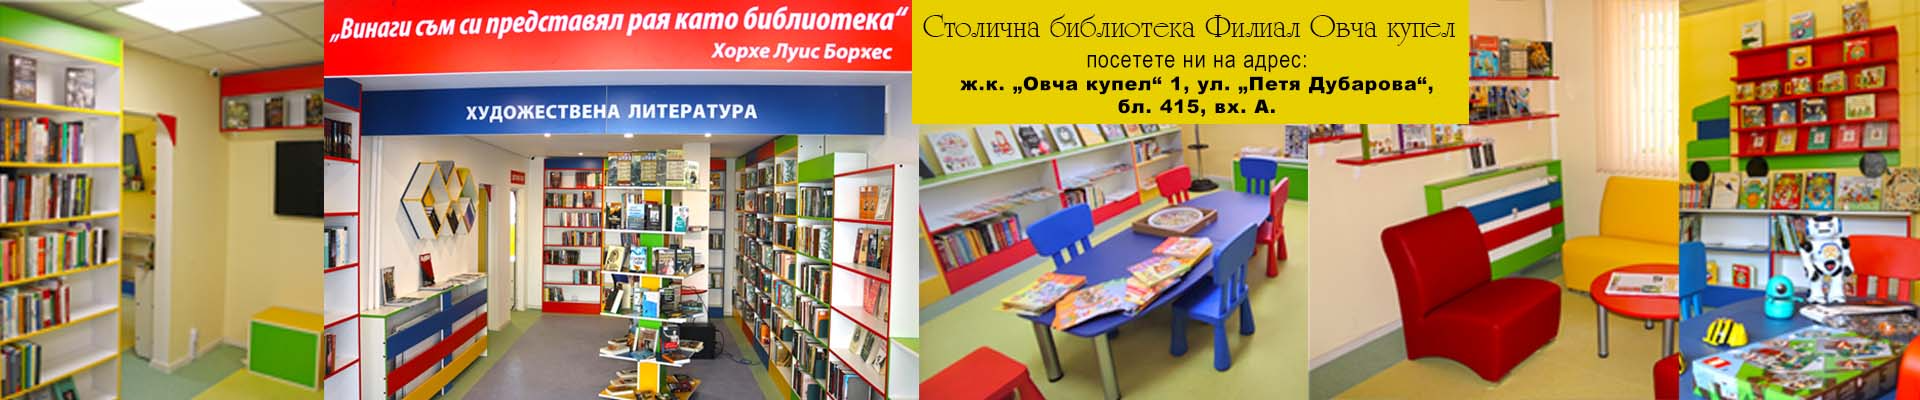 Столична библиотека открива пети филиал в София - в район „Овча купел“